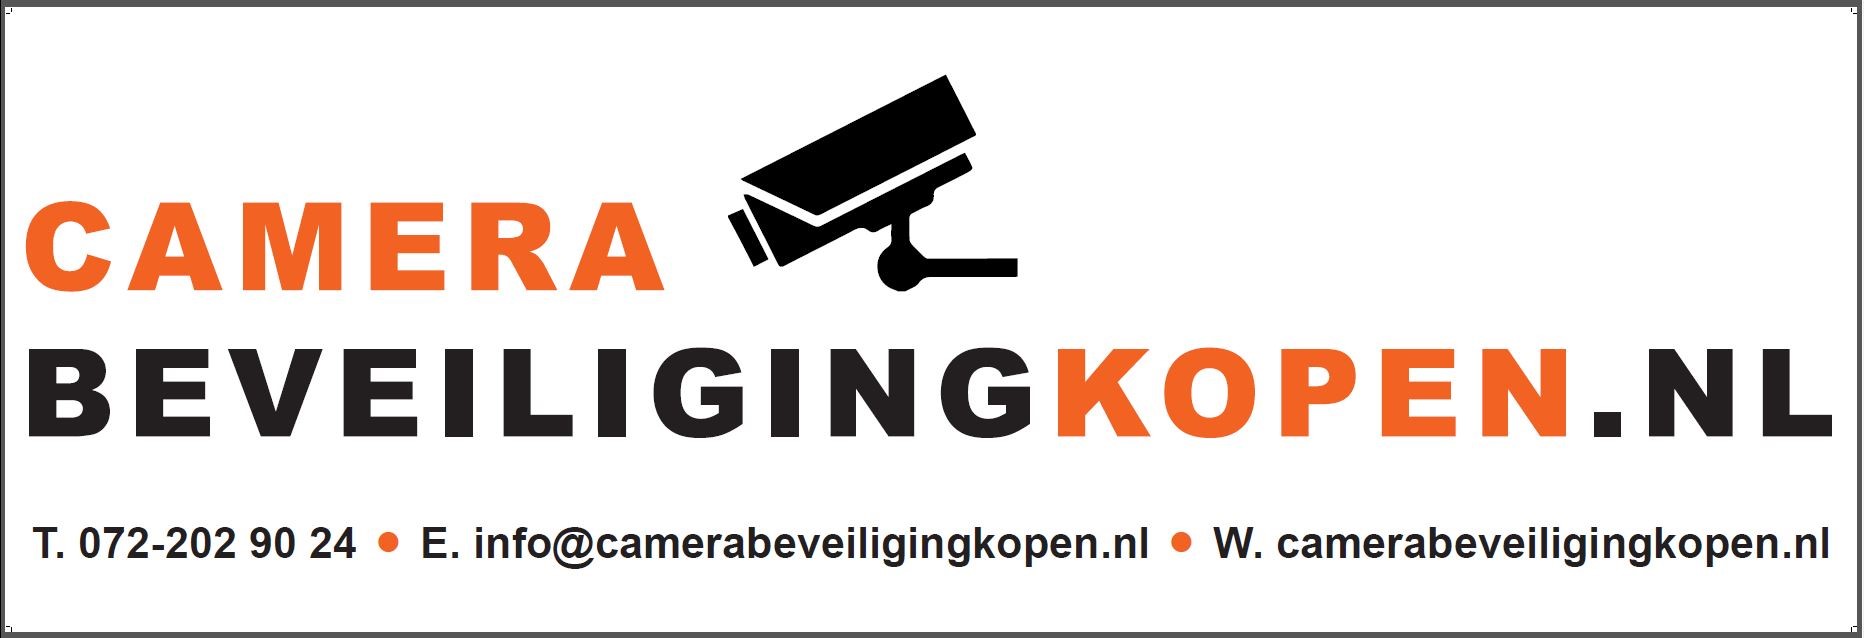 Camerabeveiligingkopen.nl